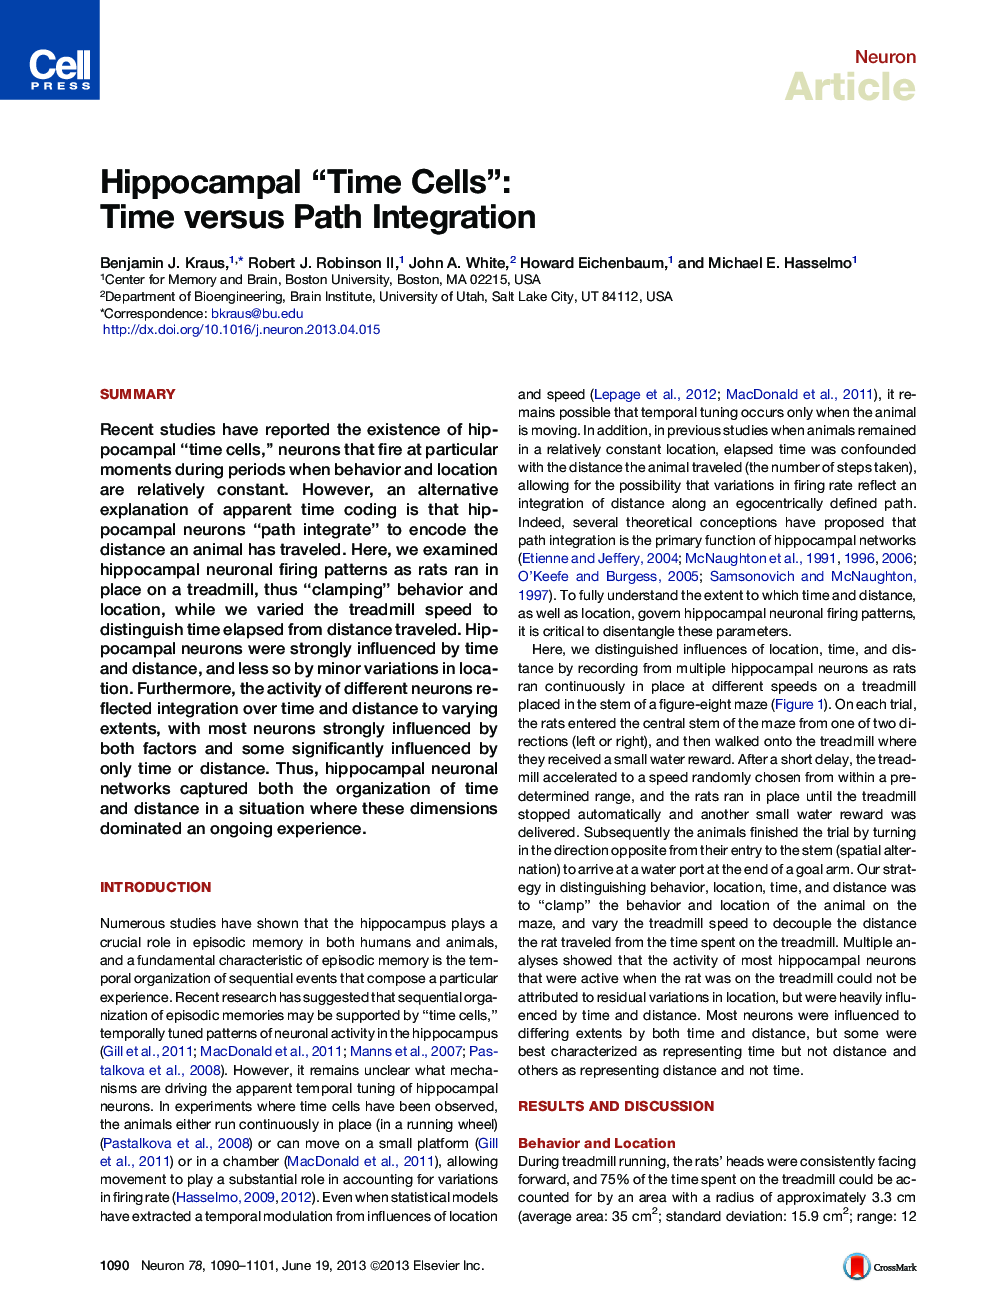 Hippocampal “Time Cells”: Time versus Path Integration